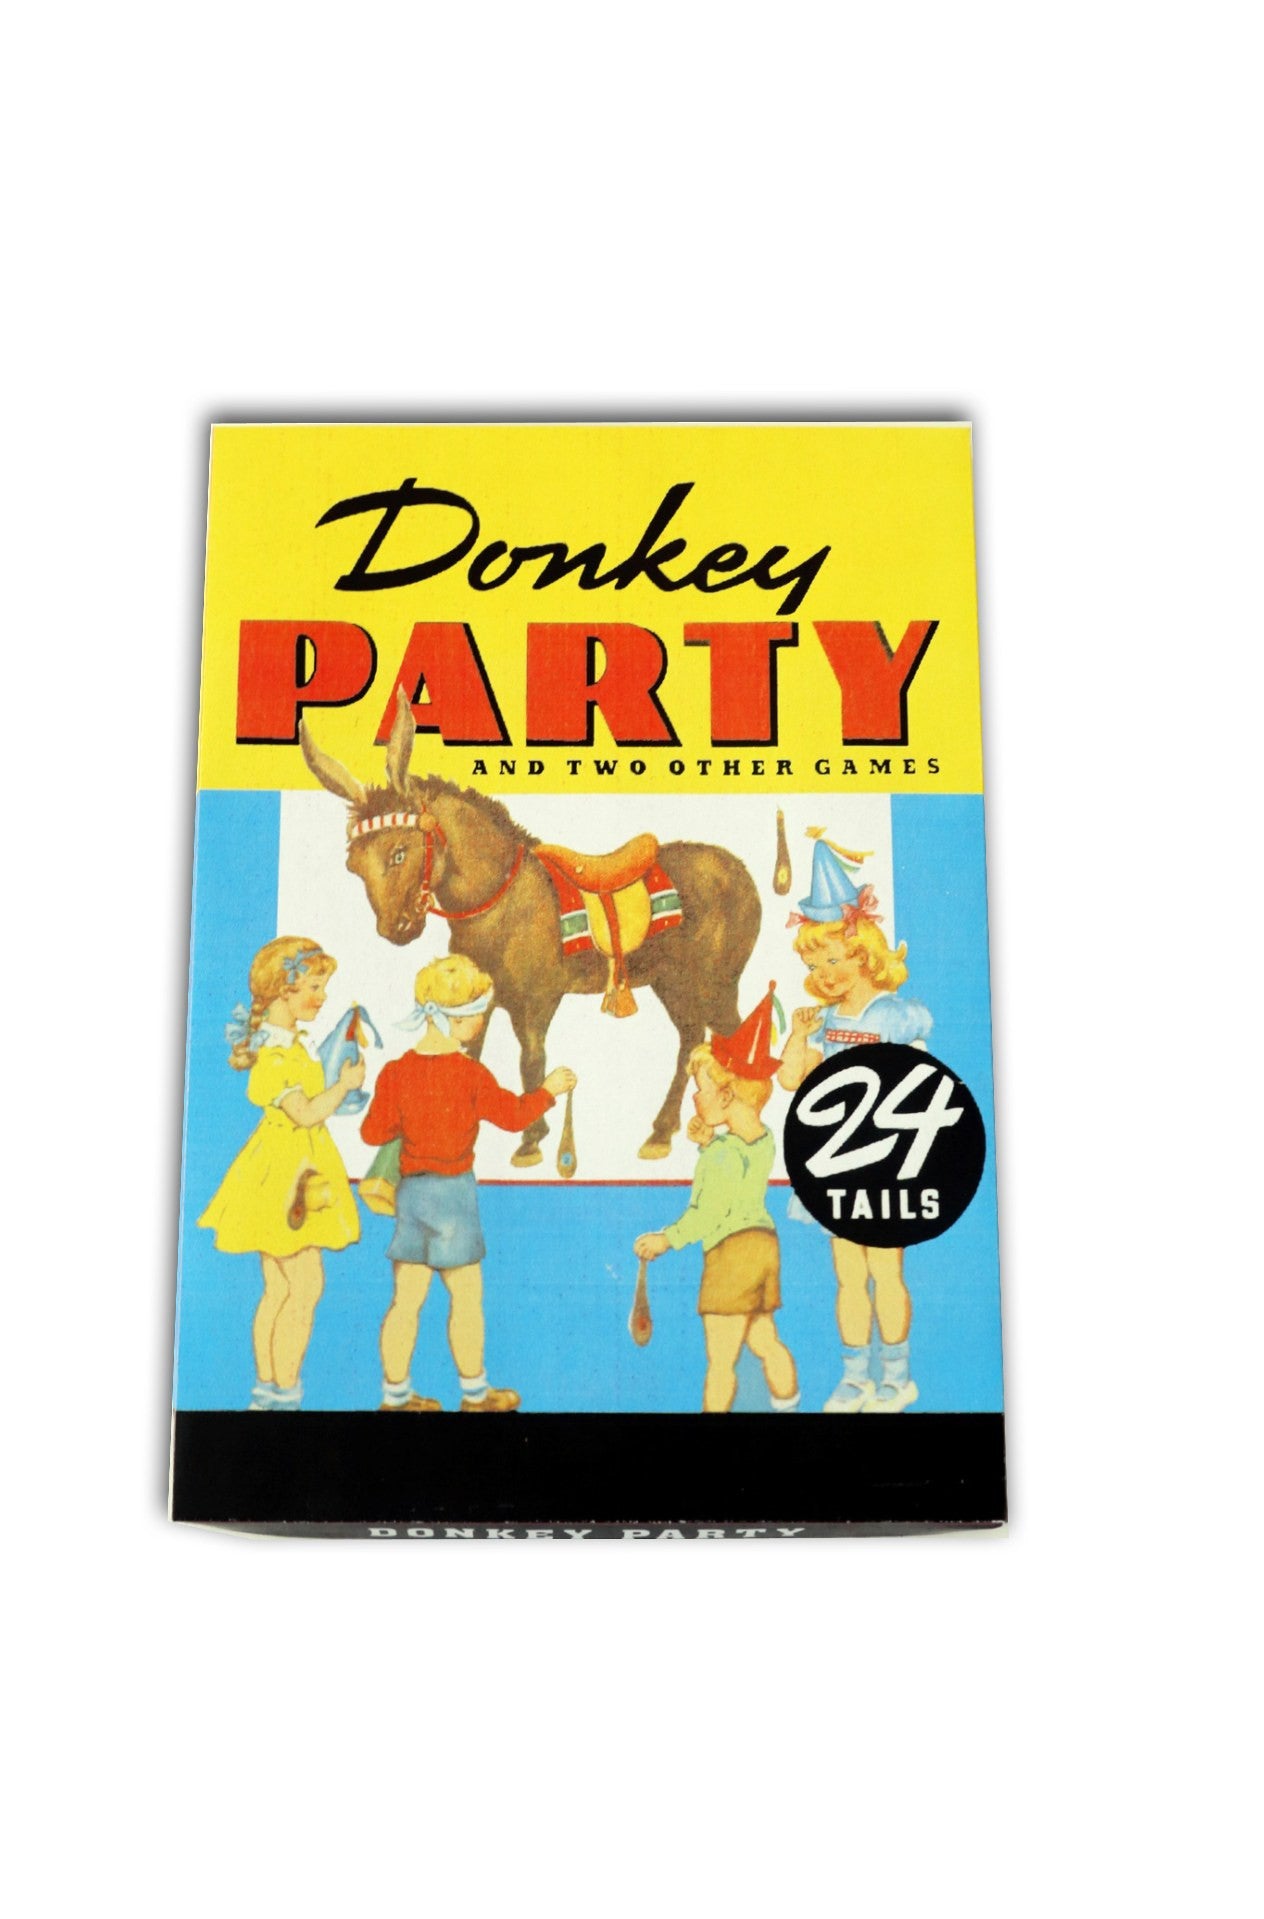 Perisphere and Trylon Donkey Party RG-30013